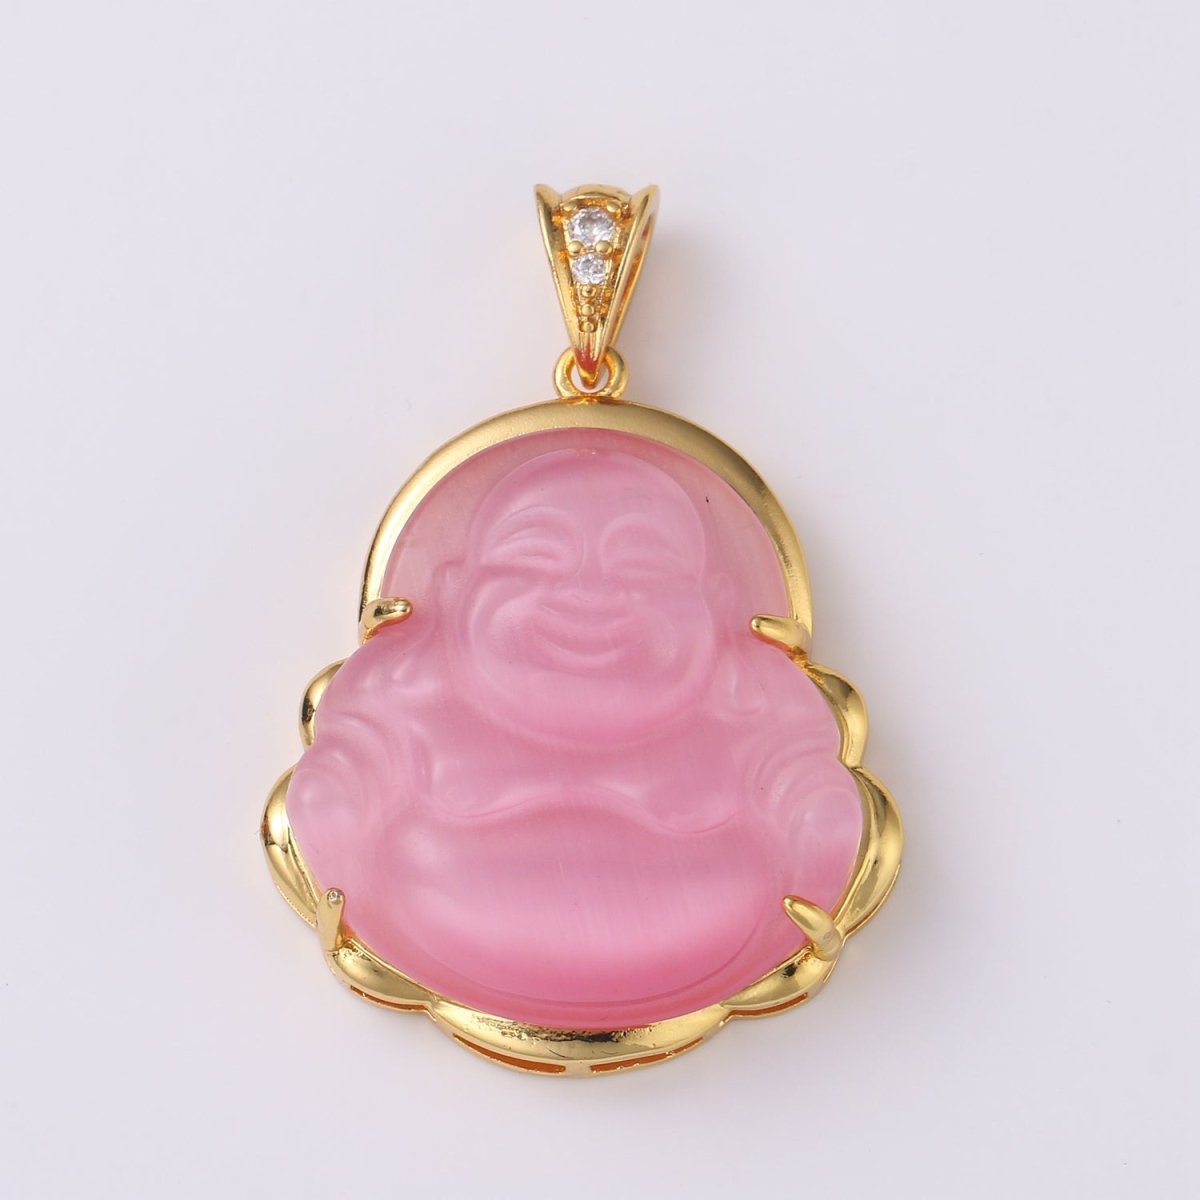 1pc 24k Gold Filled Buddha Pendant Natural Wisdom Meaning Gold Buddha Necklace Charm Laughing Buddha Buddhism Religious Jewelry Making O-152 ~ O-163 O-241 O-242 - DLUXCA